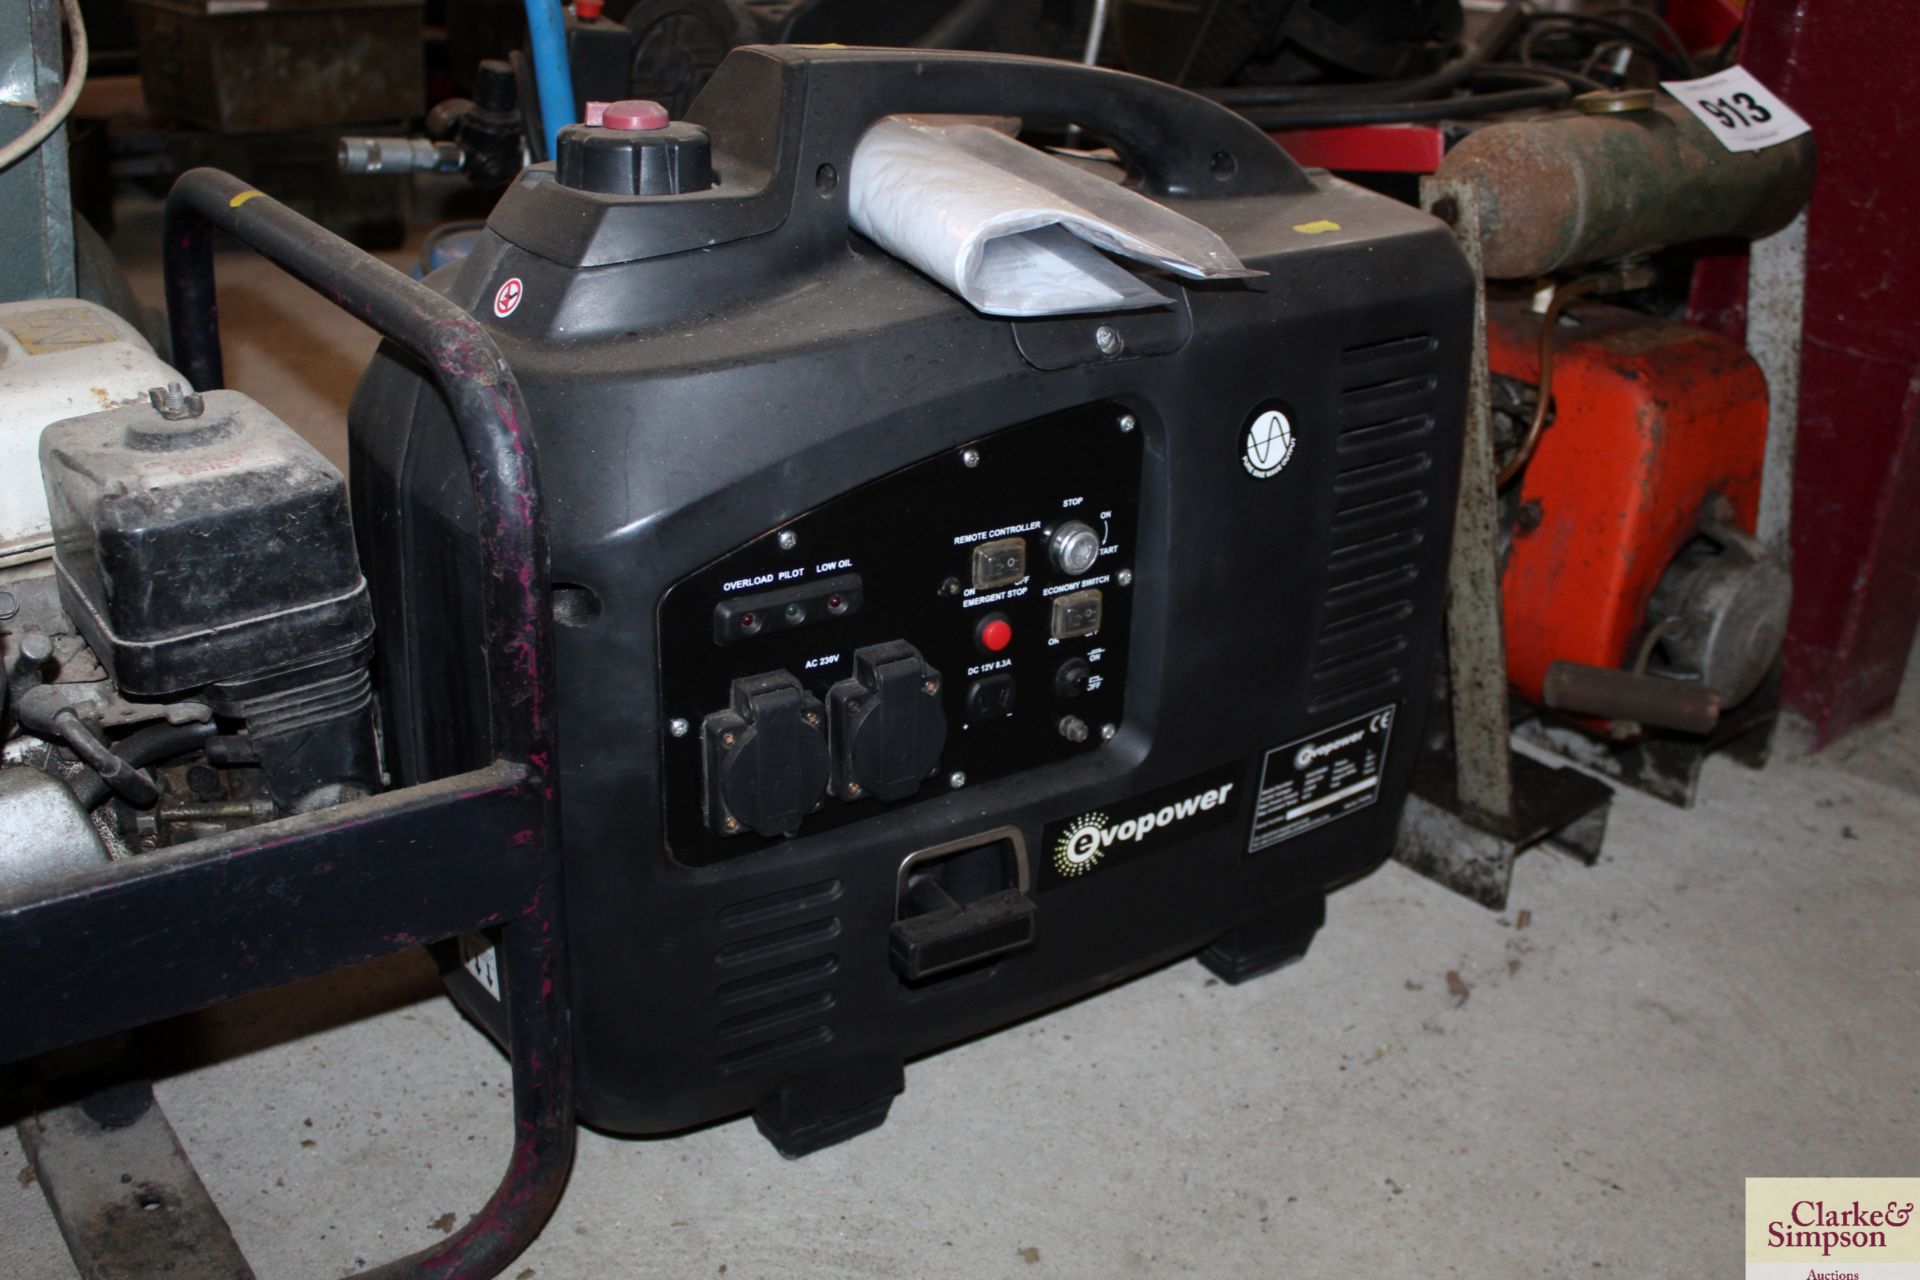 EuroPower portable generator. - Image 2 of 4